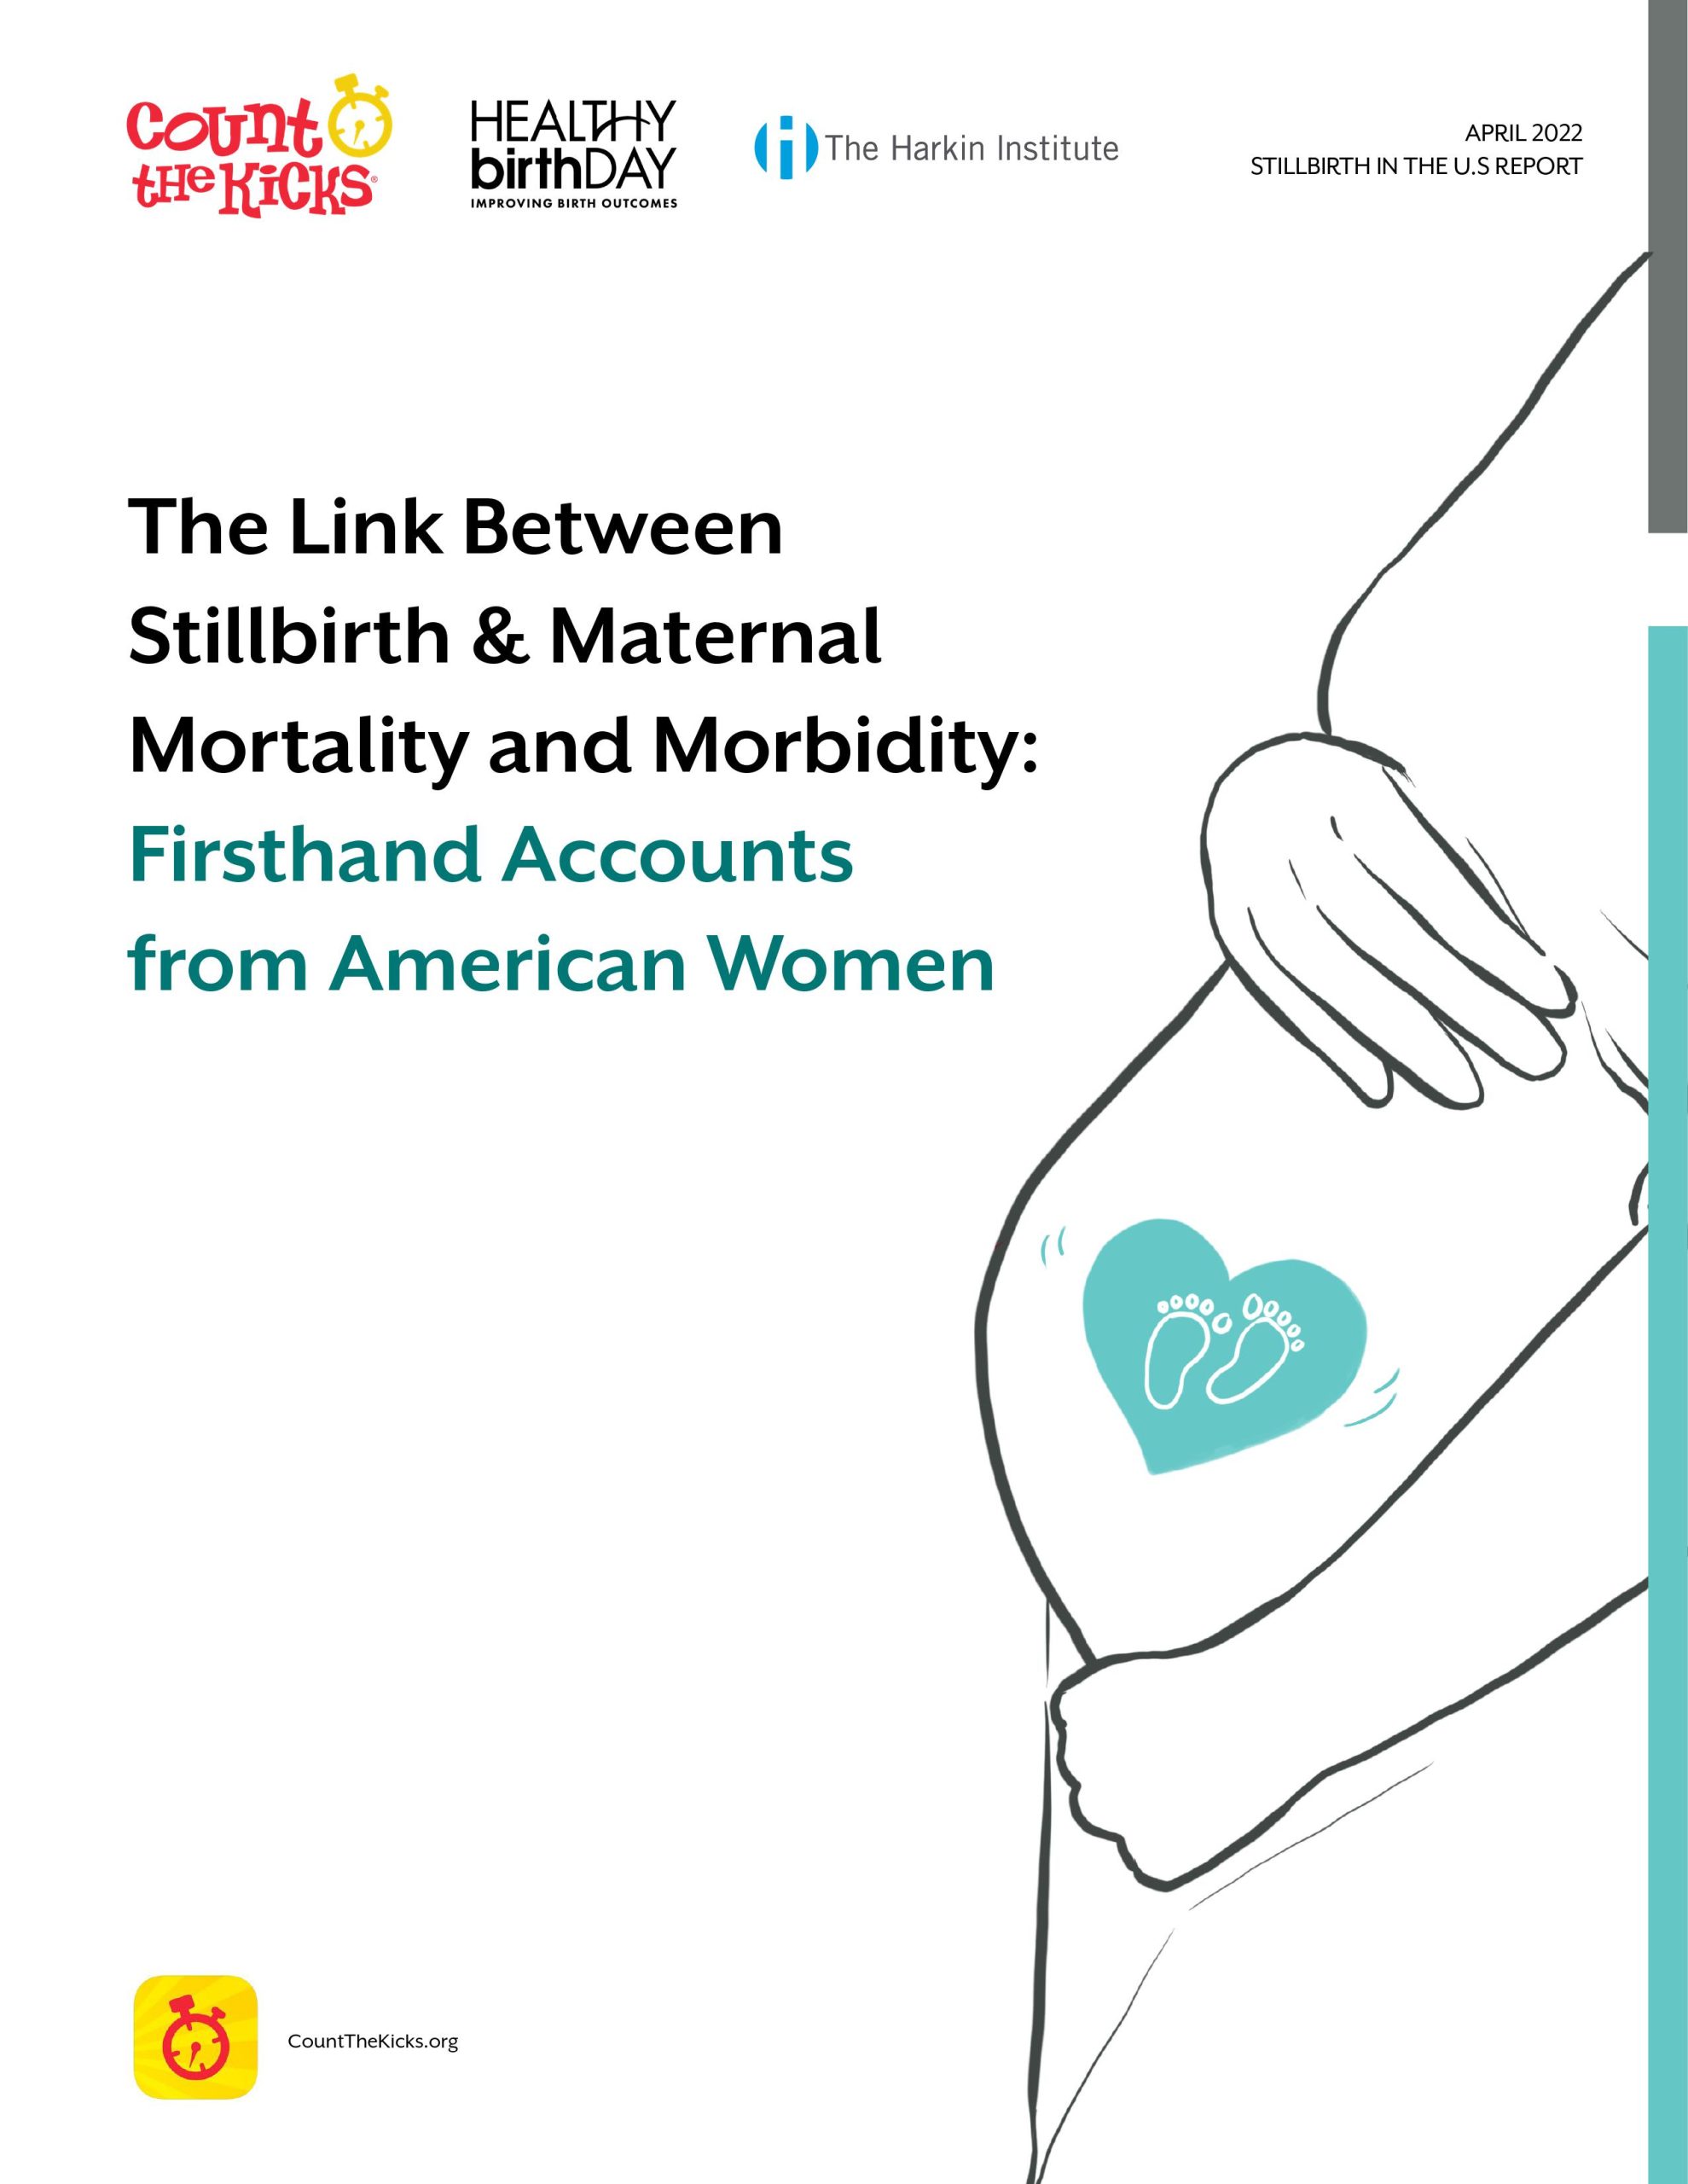 Stillbirth in the U.S. Report